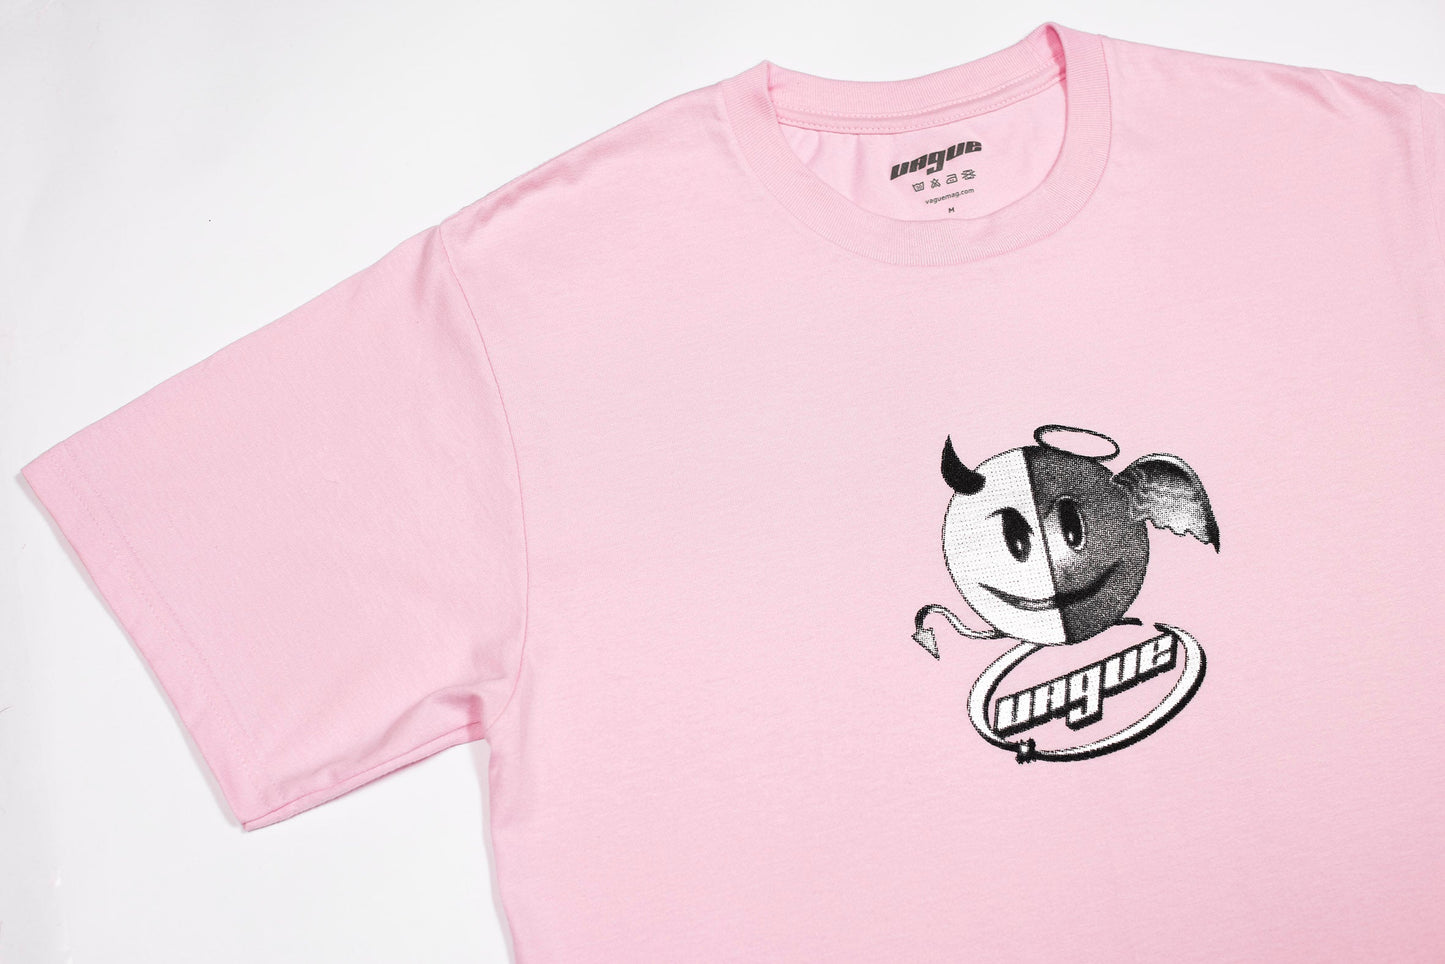 Vague - Princess Hollywood - Pink T-Shirt